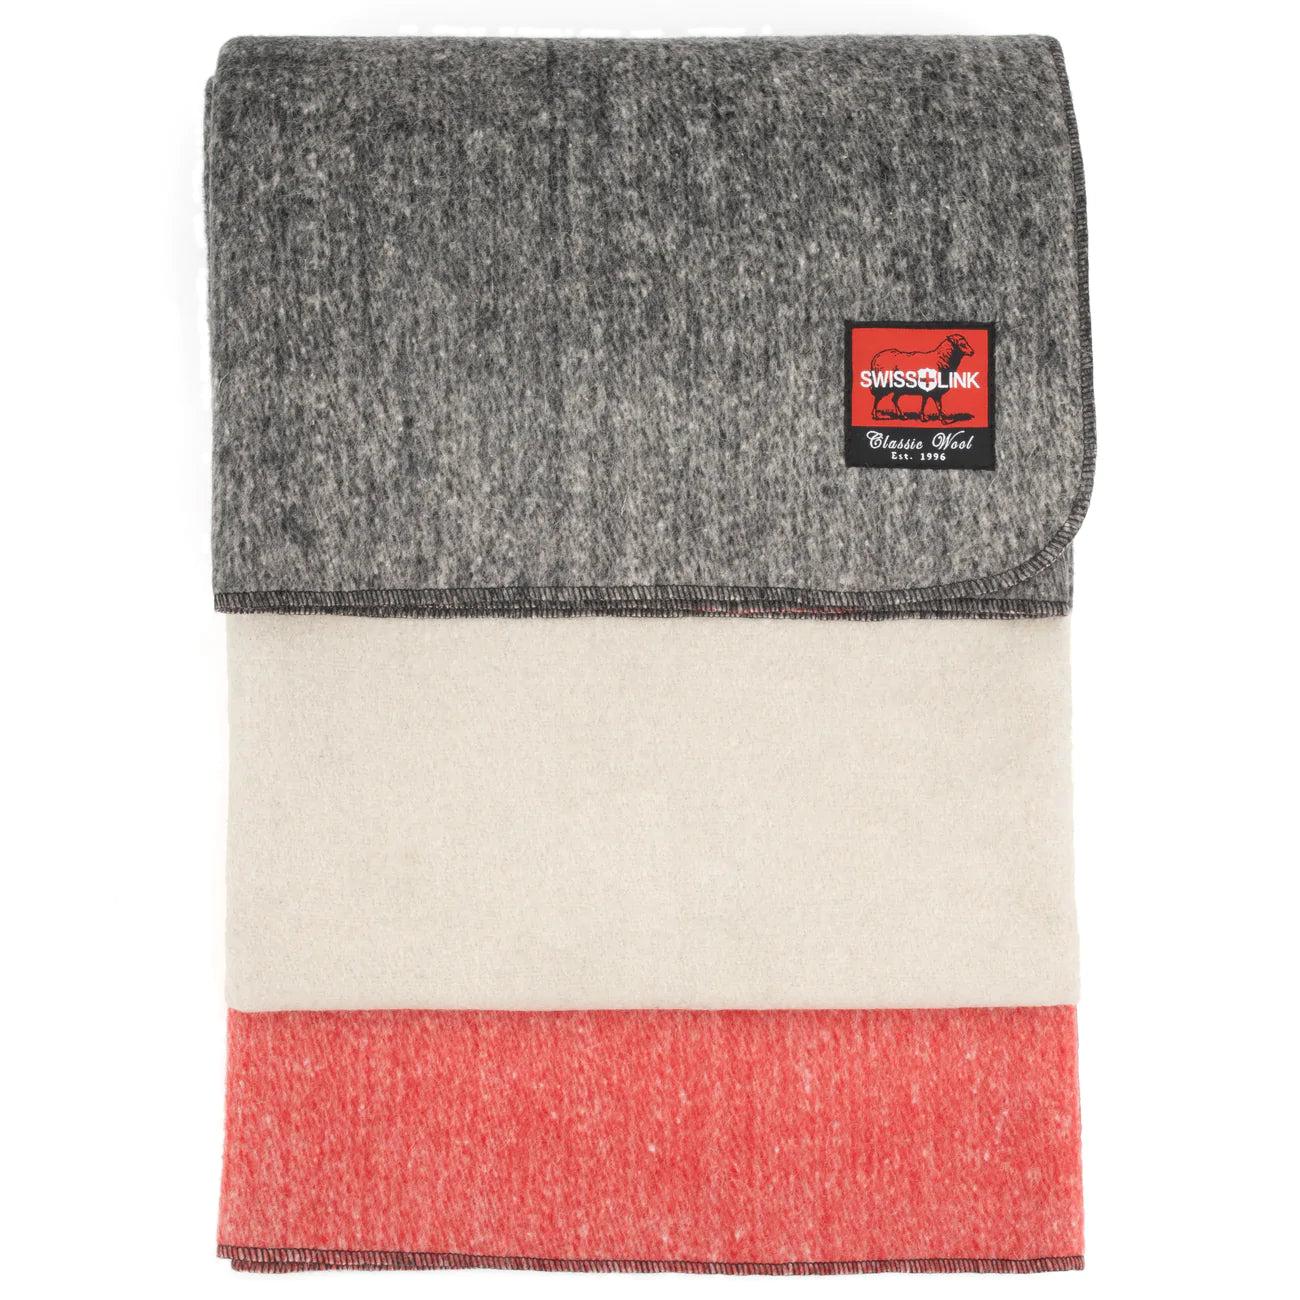 Swiss Link Crimson Point Classic Wool Blanket